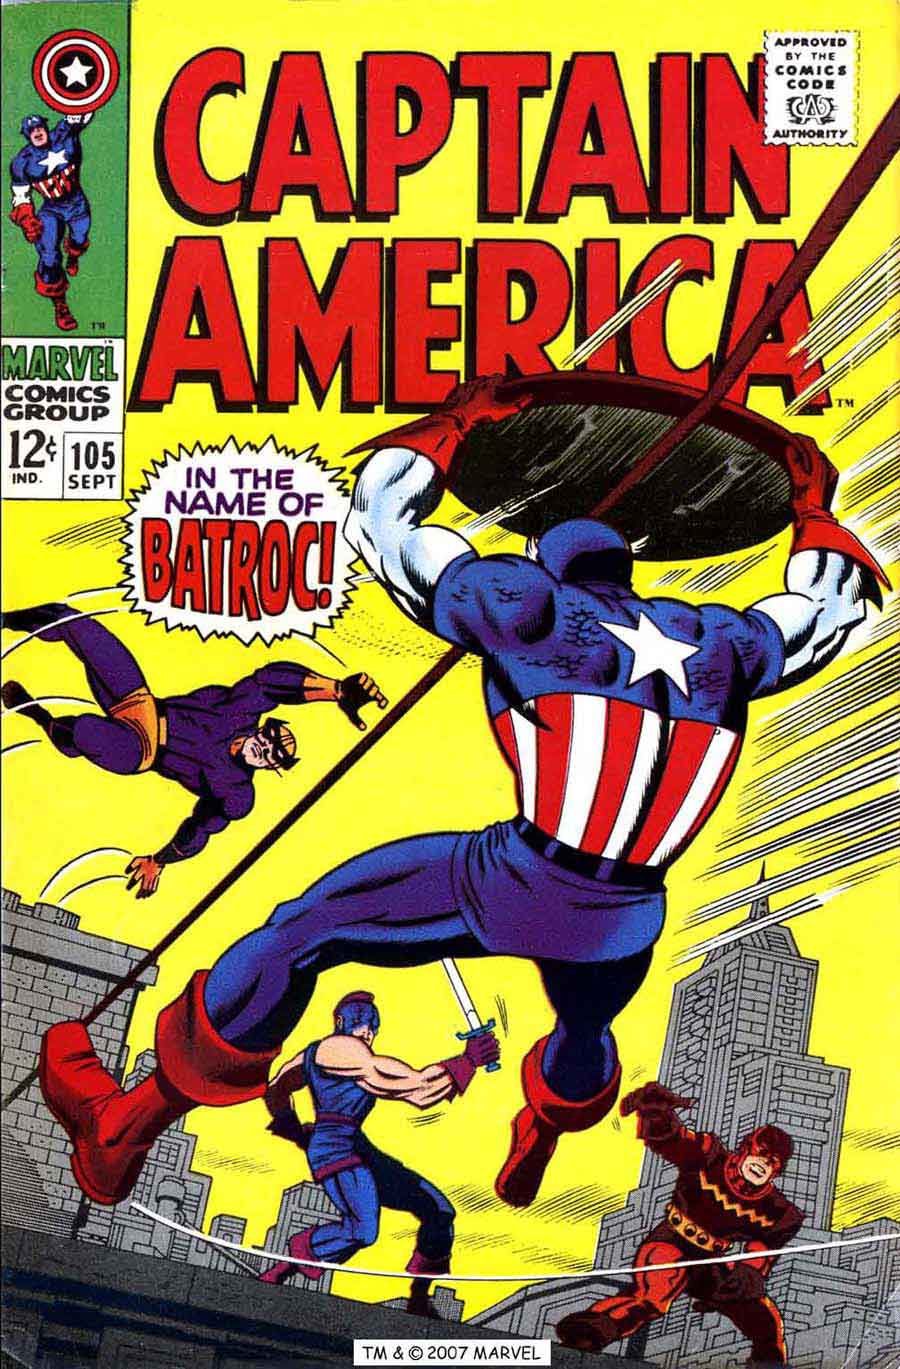 Captain America v1 #105 marvel comic book cover art by Jack Kirby